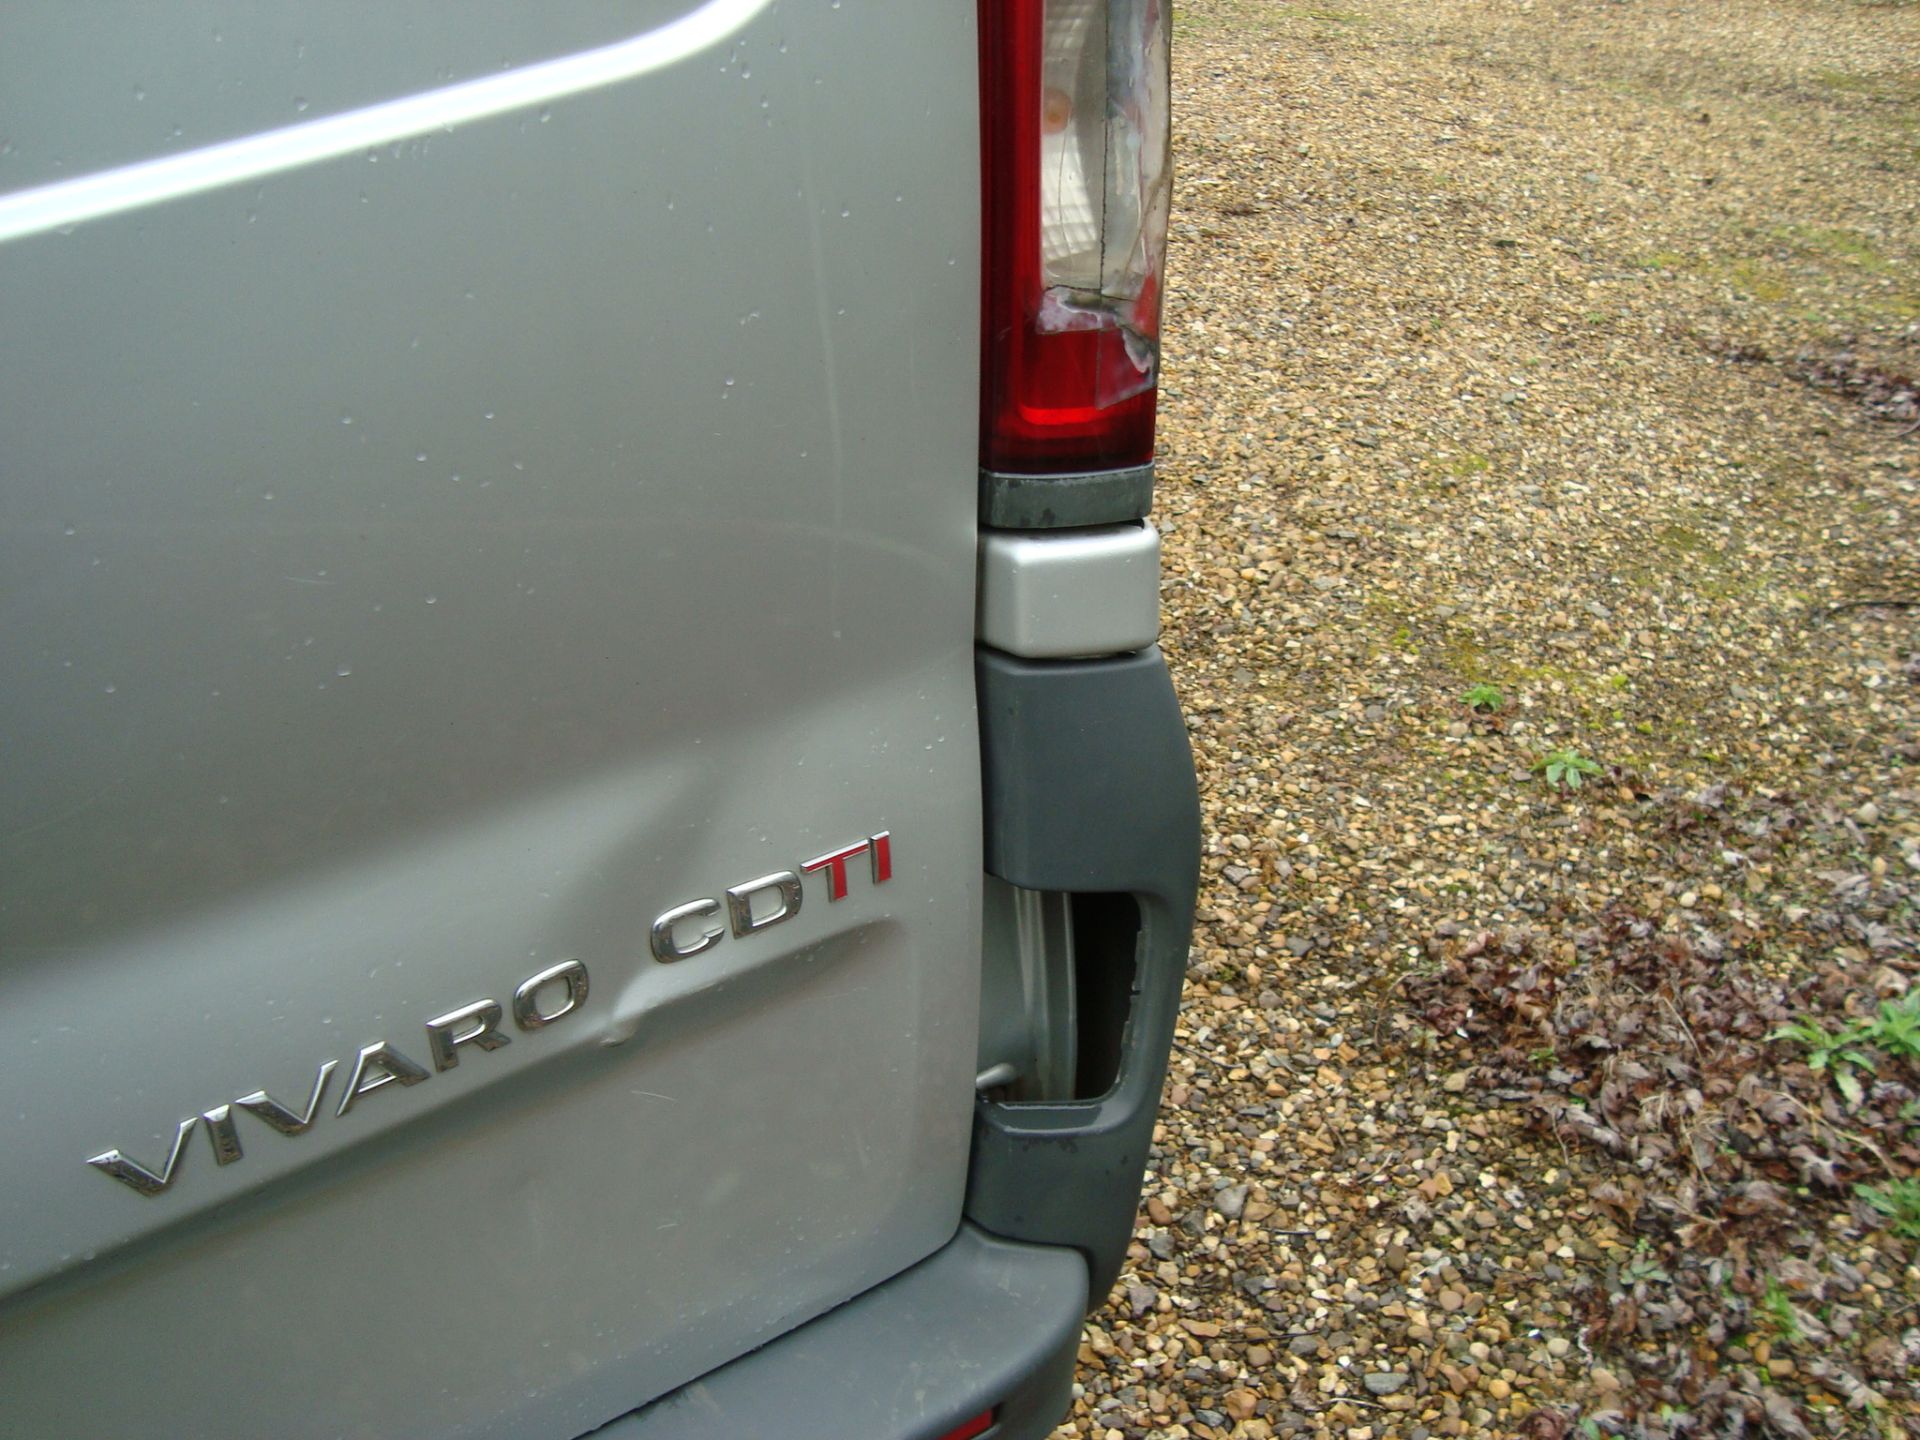 Vauxhall Vivaro 2900 CDTI 113 2.0 diesel long wheelbase six seat crew cab panel van - Image 8 of 14